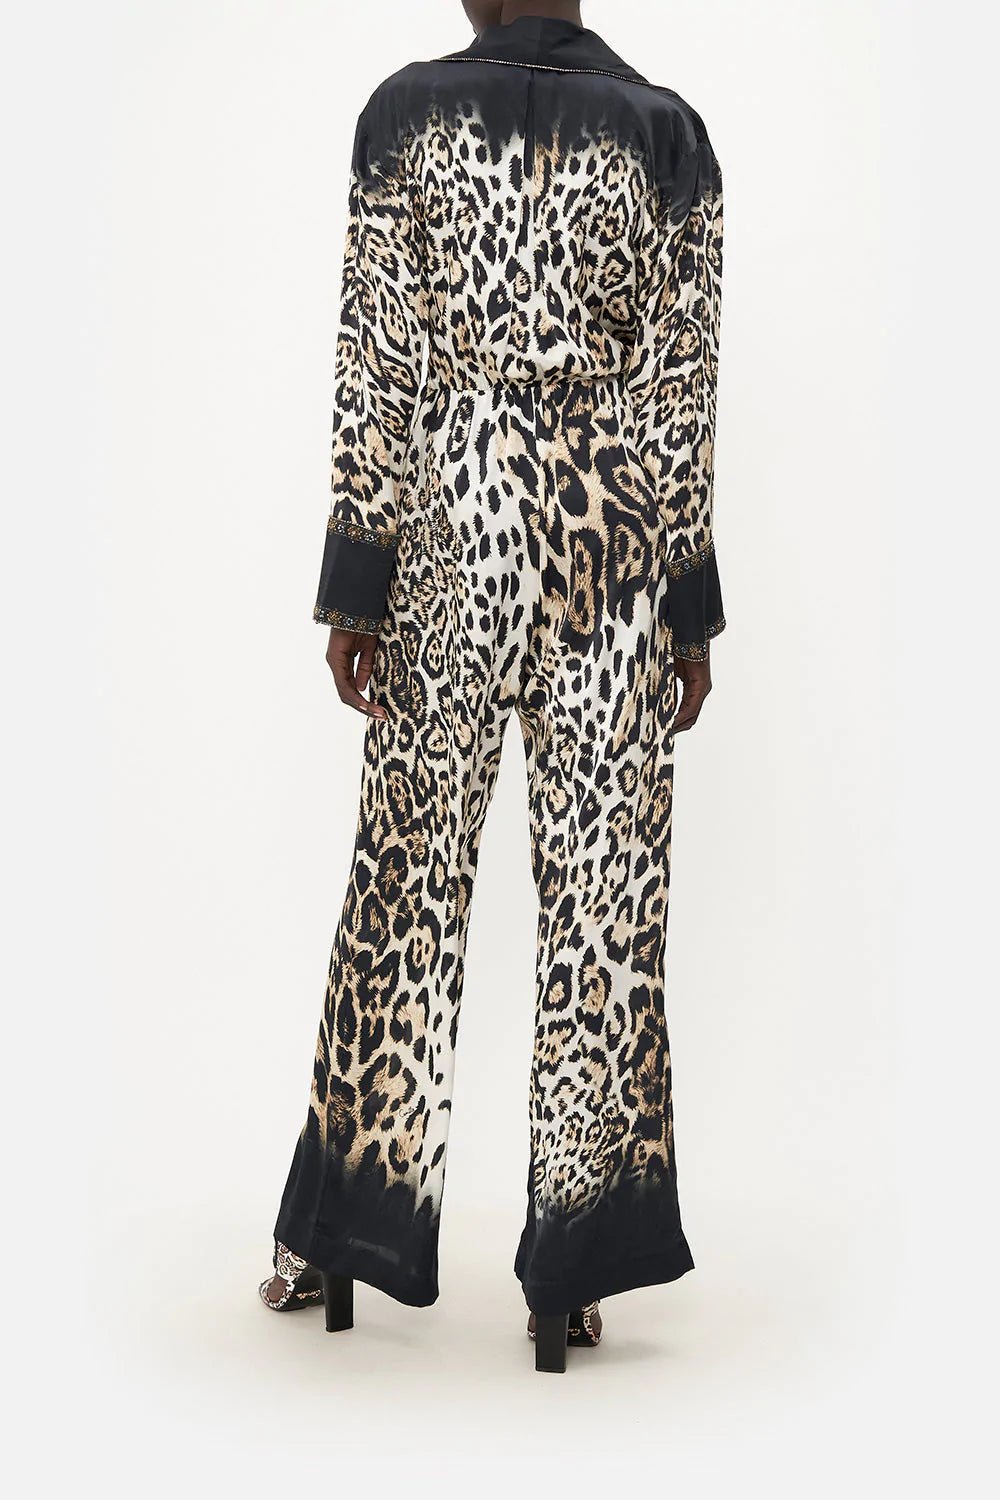 CAMILLA Pajama Jumpsuit Cool For Cats - Pinkhill, Darwin boutique, Australian high end fashion, Darwin Fashion